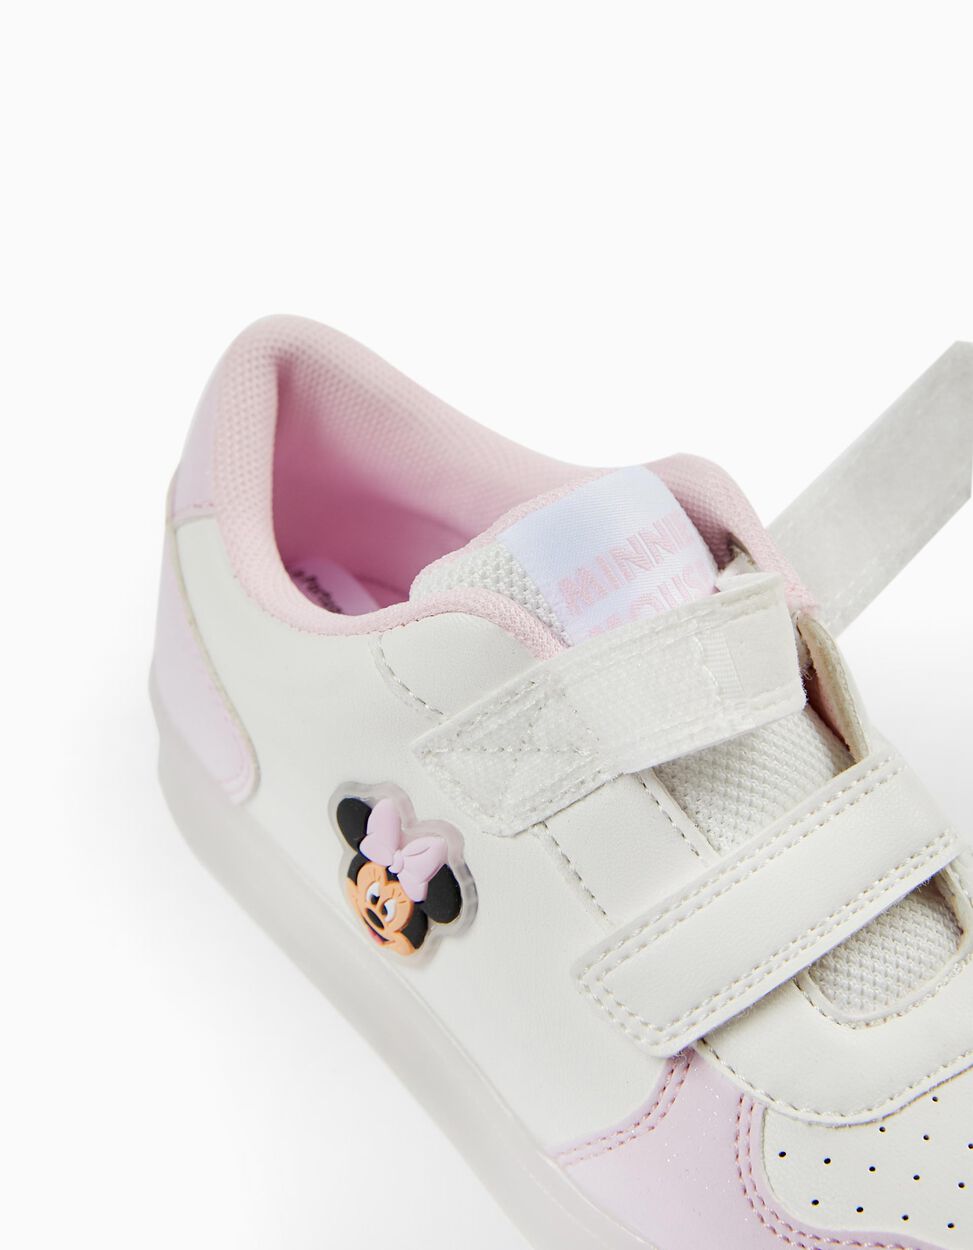 Comprar Online Zapatillas con Luces para Niña 'Minnie', Blanco/Rosa